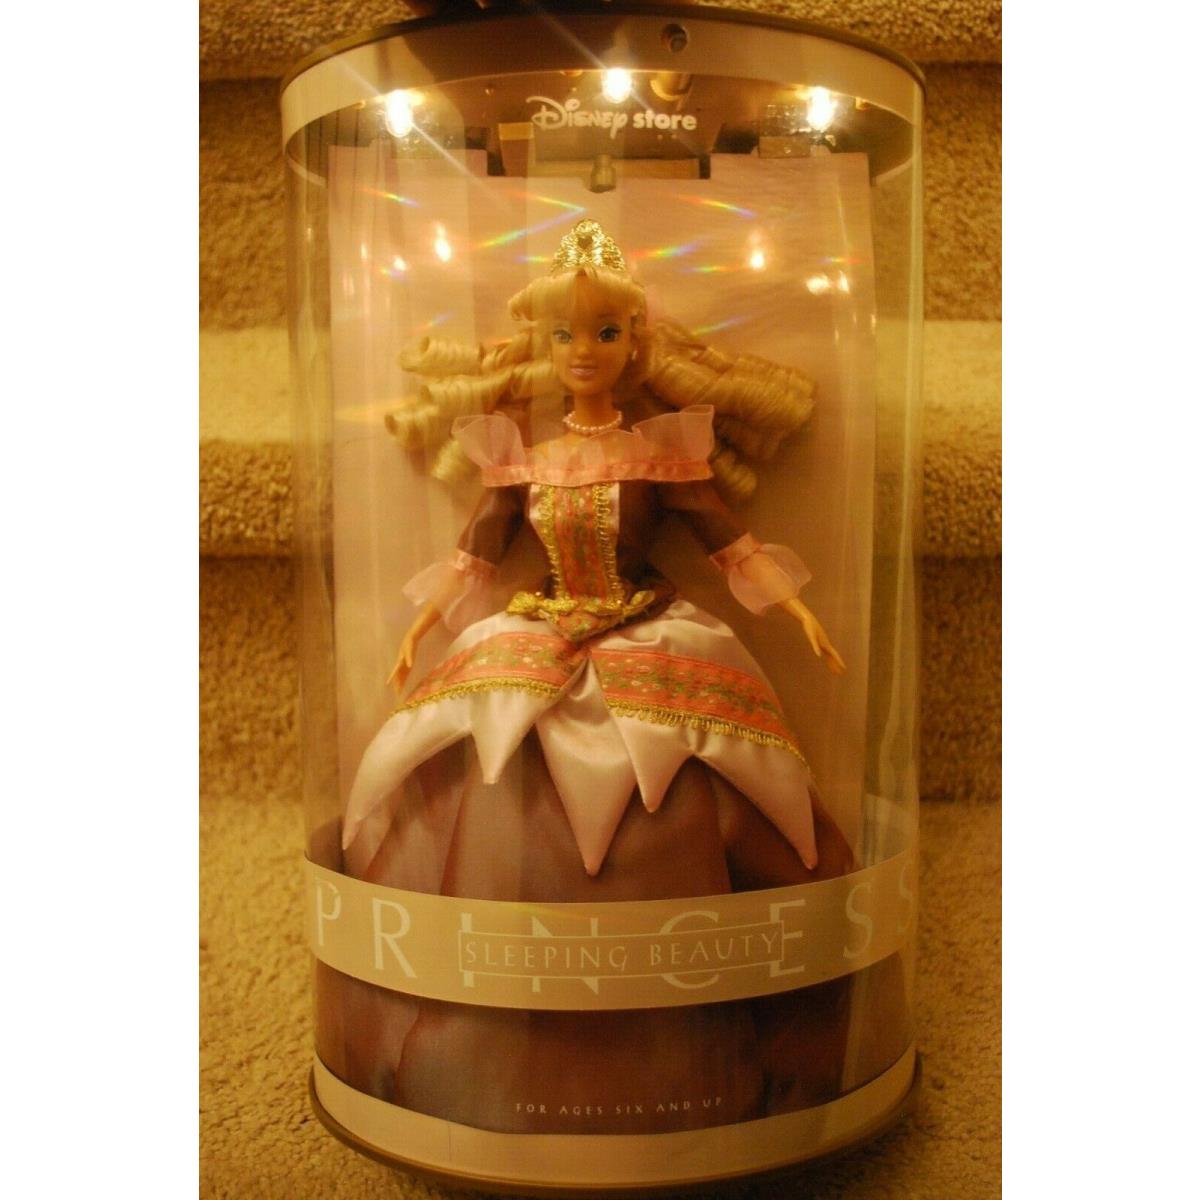 Limited Edition Disney Store Classic Princess Aurora Doll Sleeping Beauty